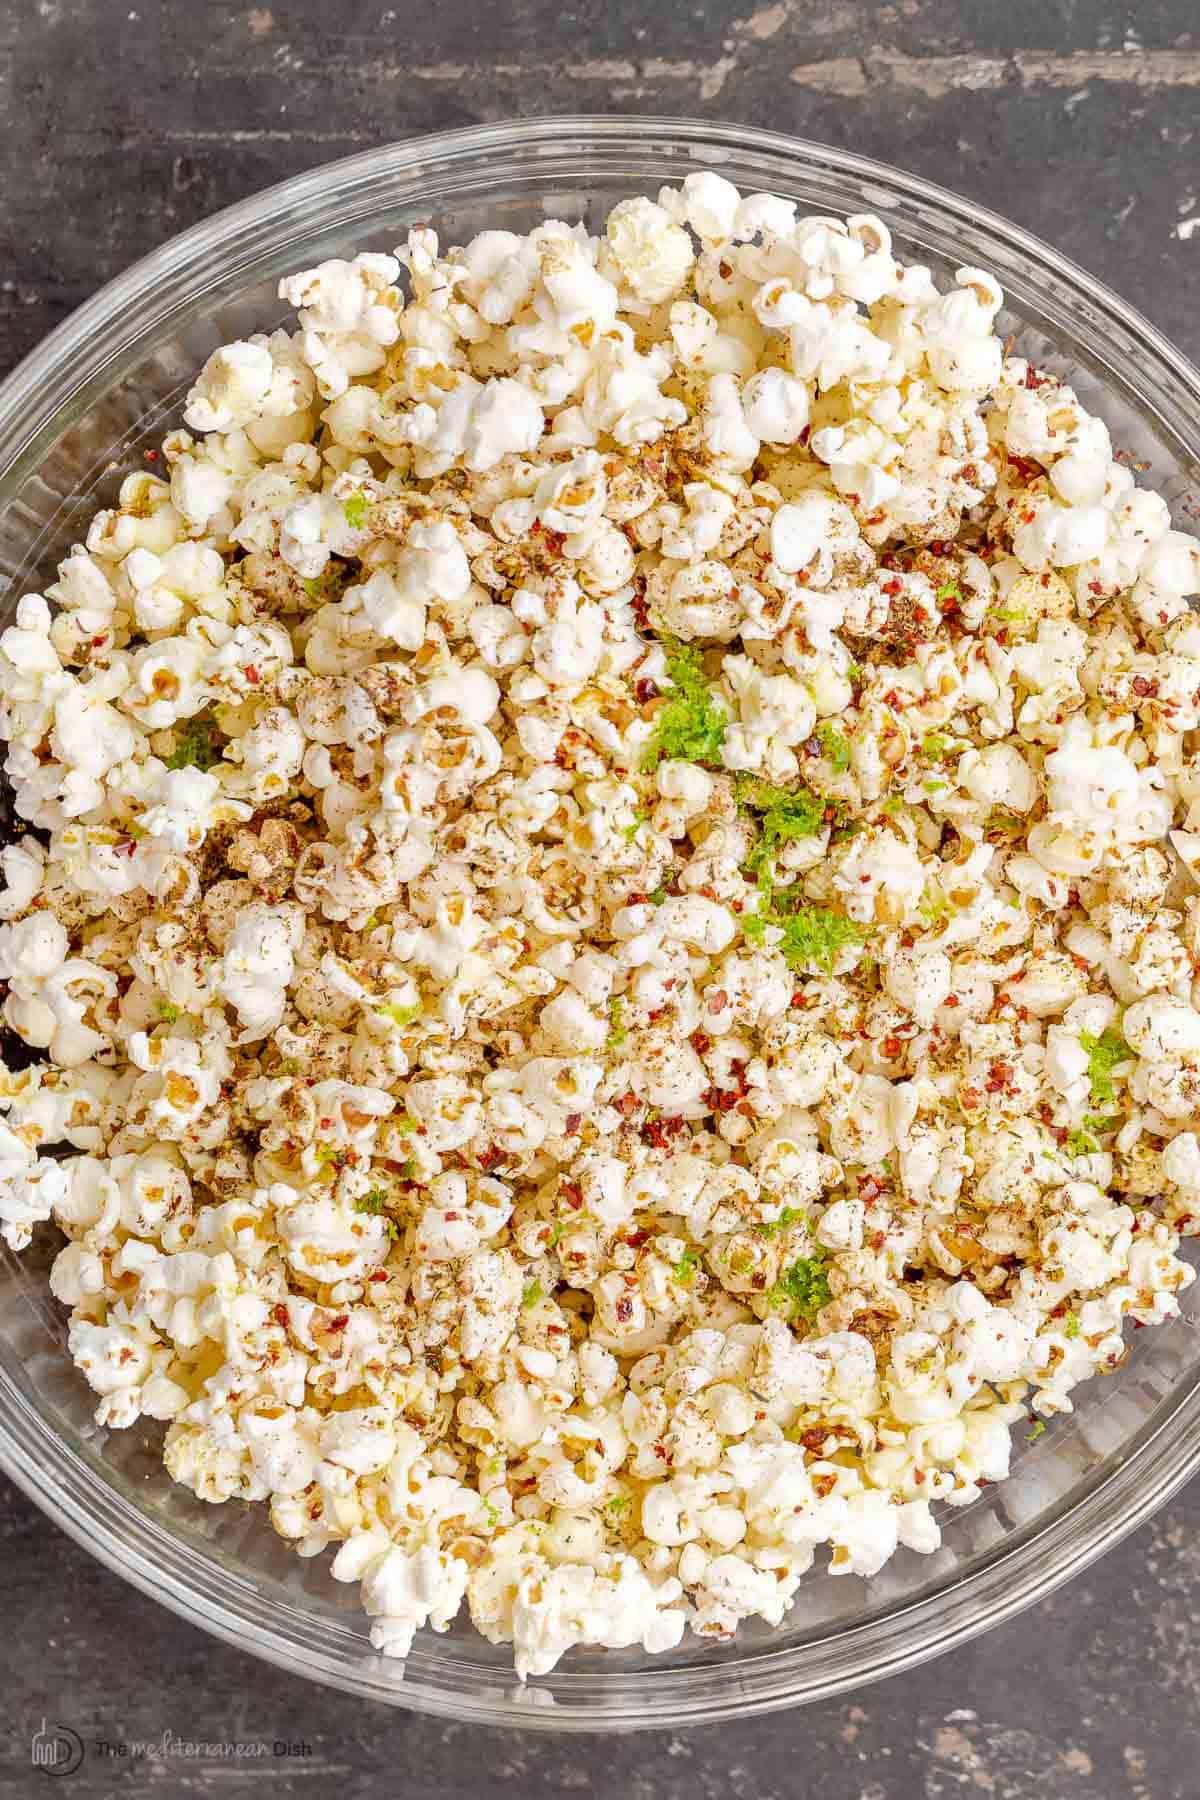 https://www.themediterraneandish.com/wp-content/uploads/2022/01/homemade-popcorn-with-zaatar-recipe-5.jpg